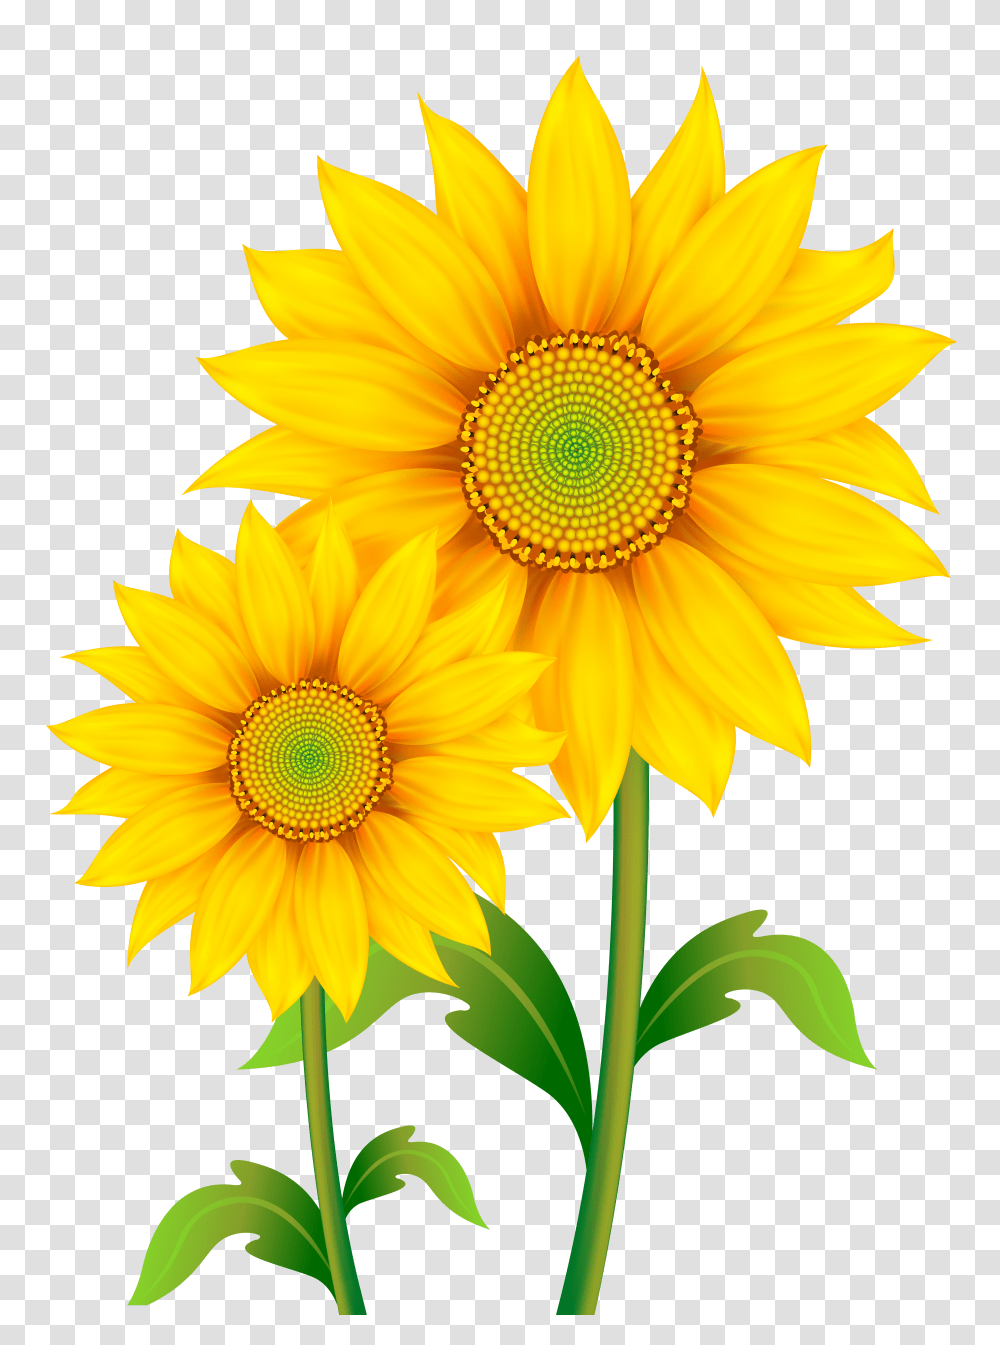 Sunflowers Images All Sun Flower Clipart Transparent Png